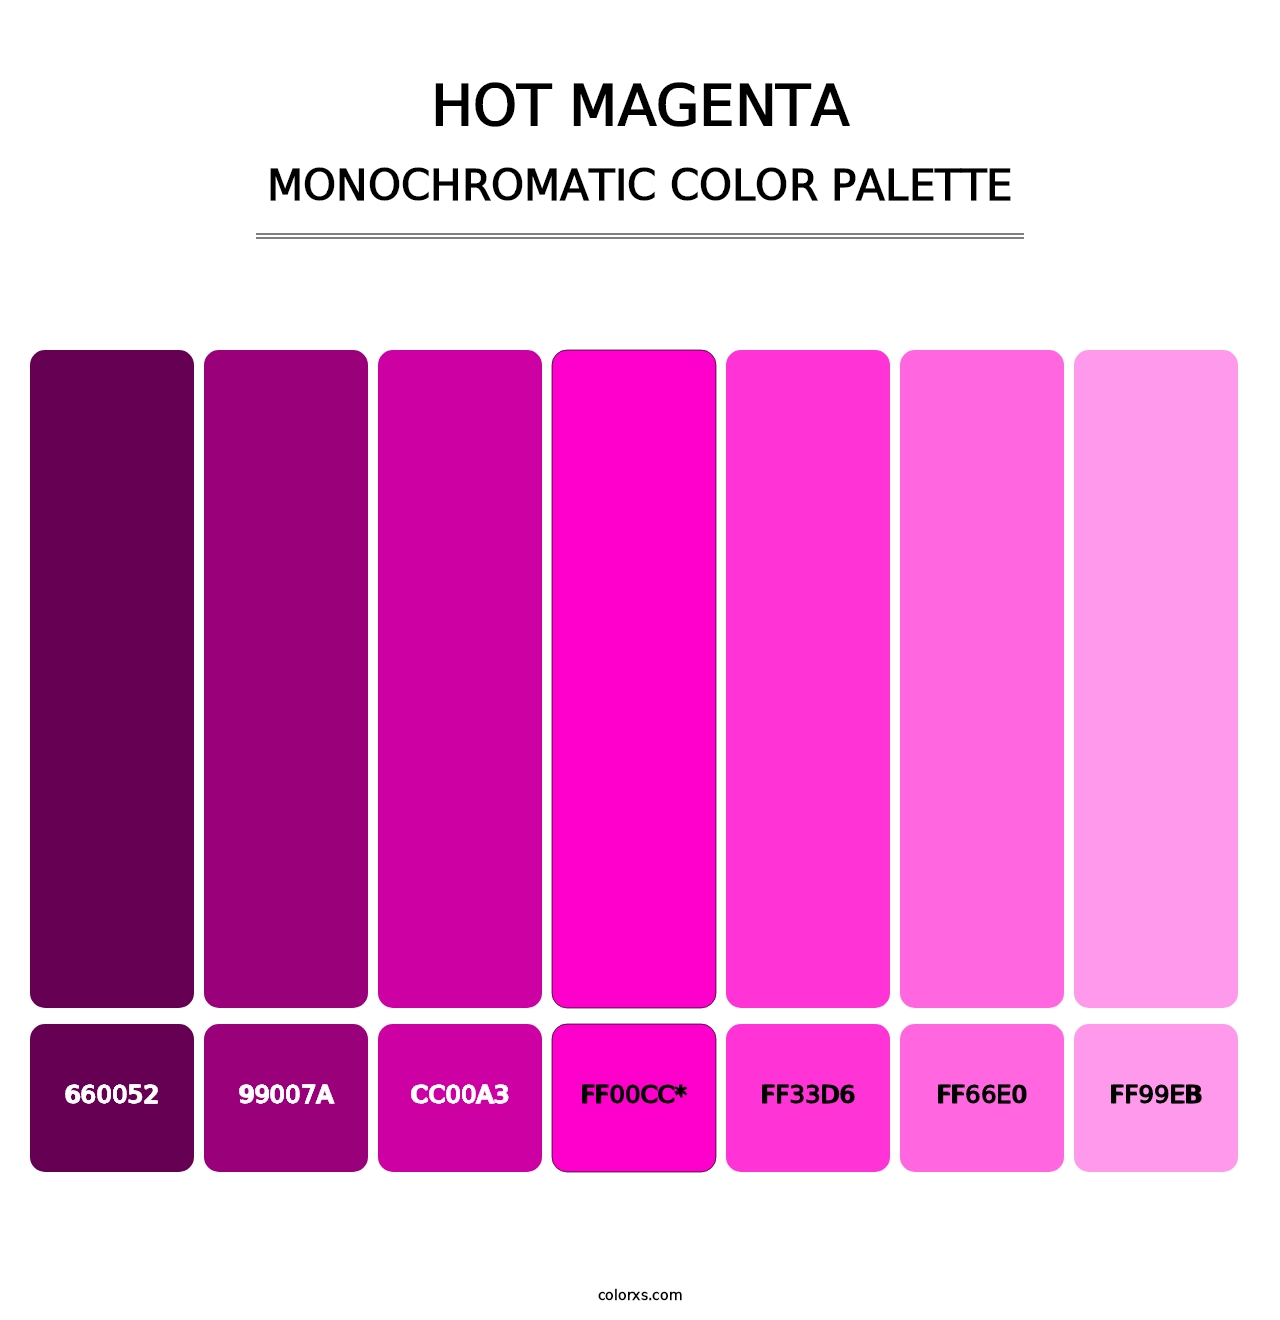 Hot Magenta - Monochromatic Color Palette